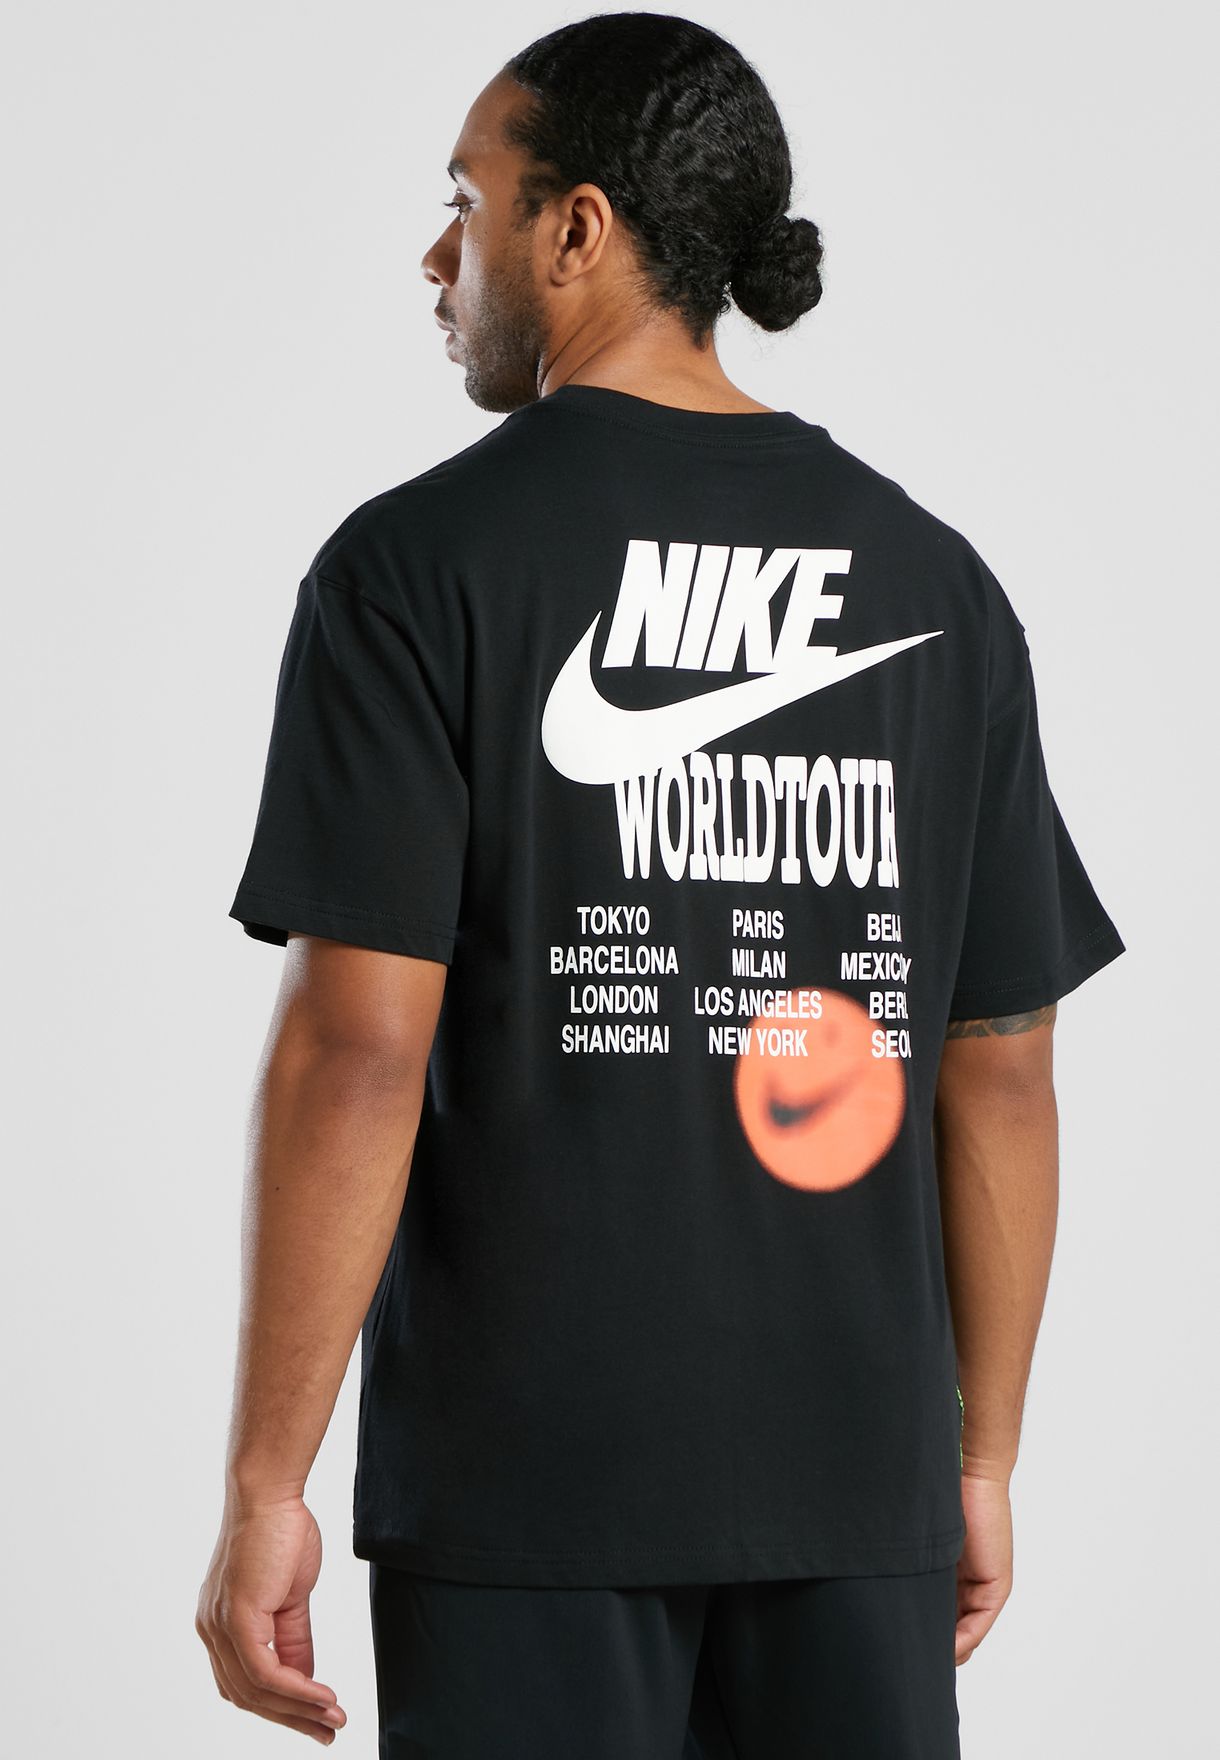 Buy > nike worldwide shirt > in stock